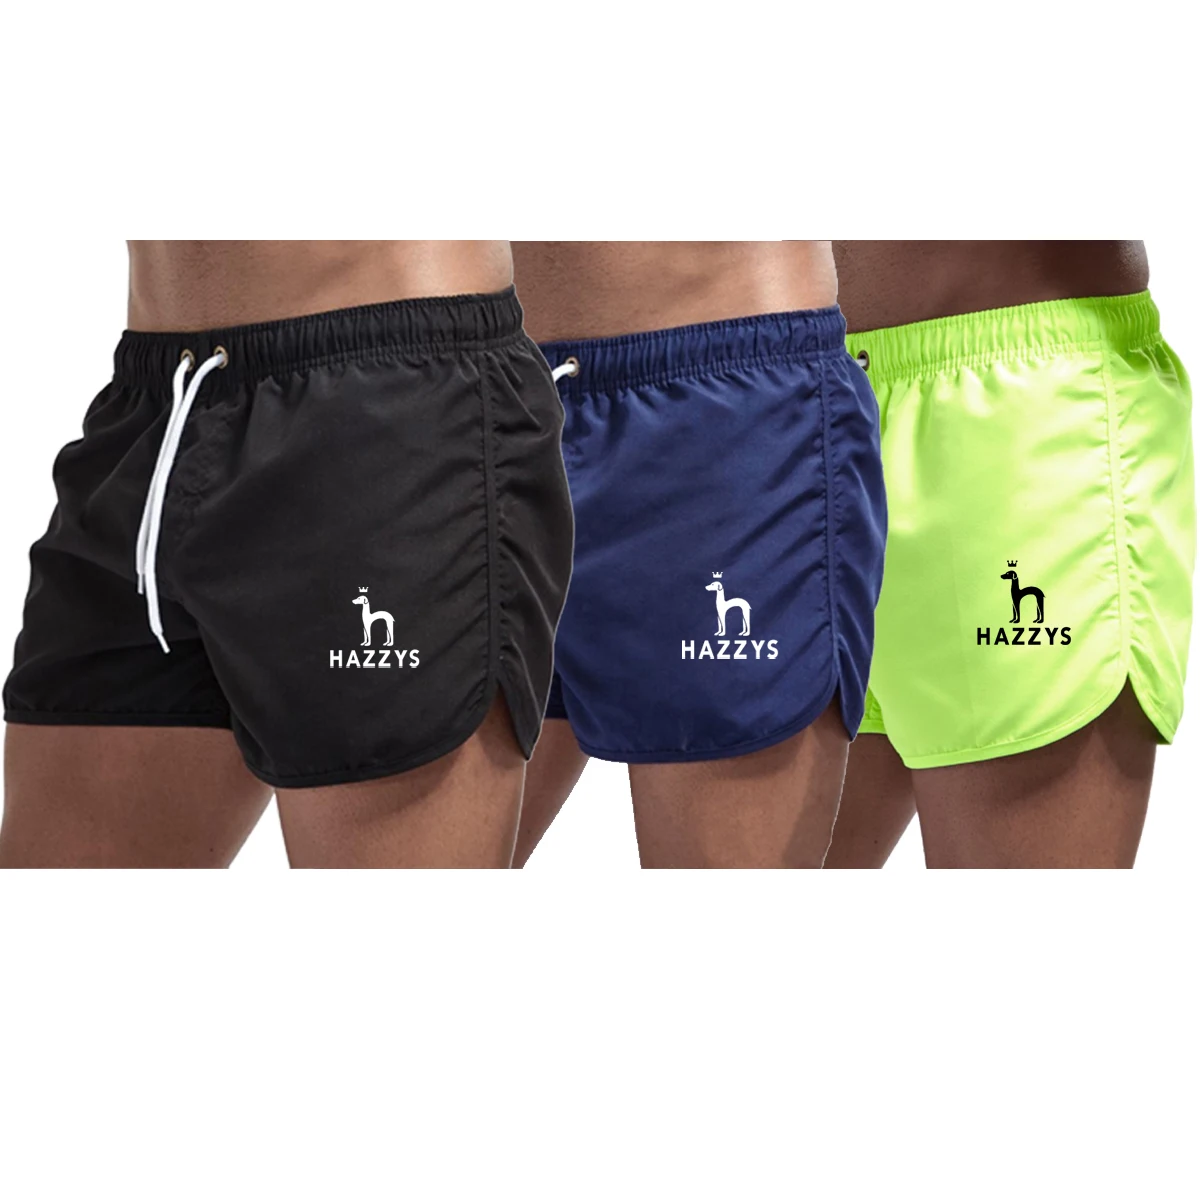 HAZZYSLuxury Print Quick Drying summer men's swimming trunks beach board shorts Men's swimming trunks Beach pants Shorts Jogging